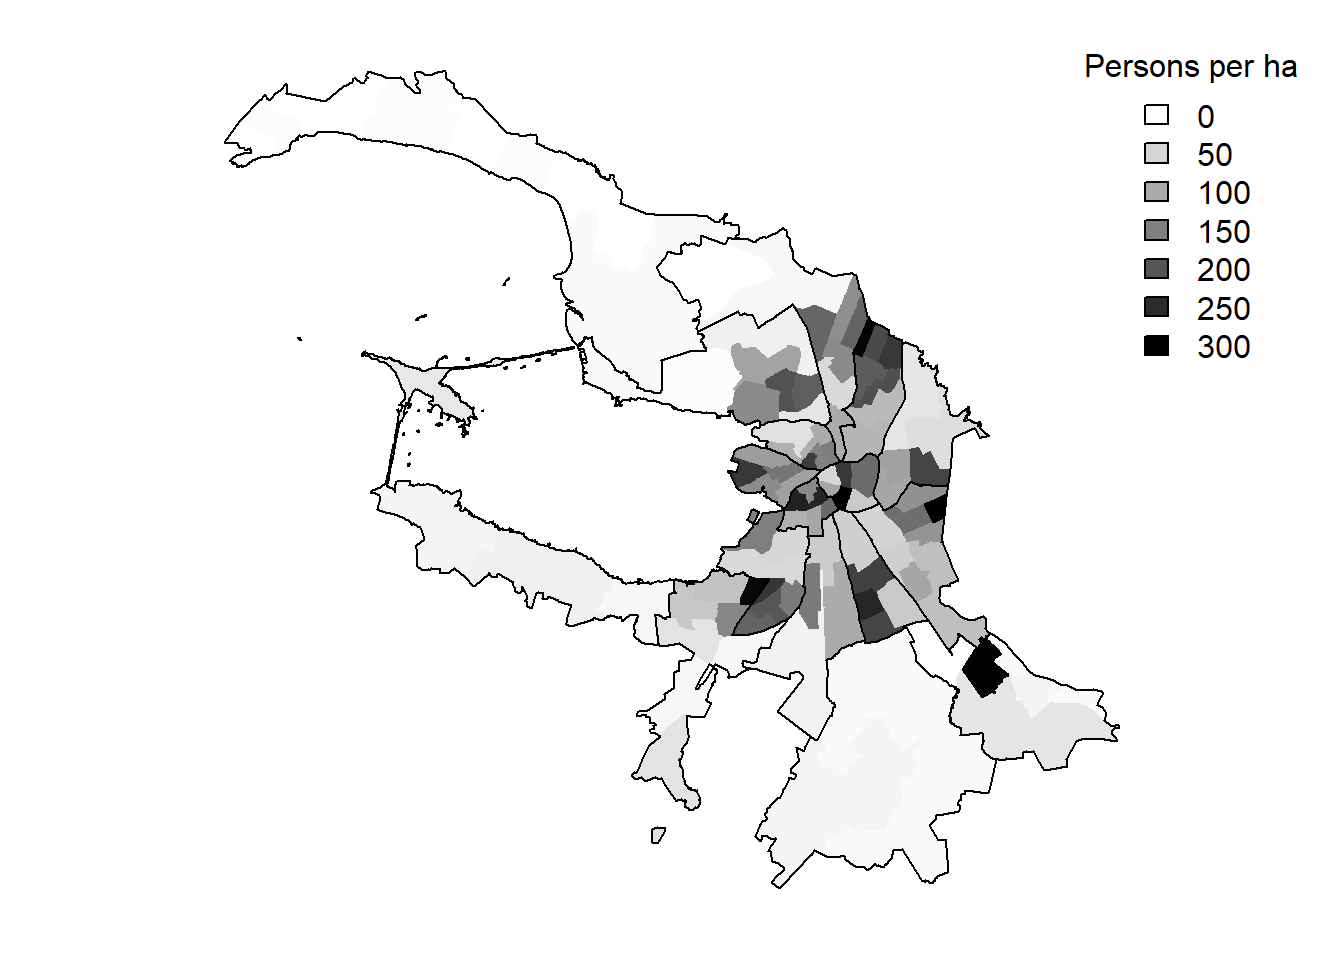 Population density in St. Petersburg, 2015